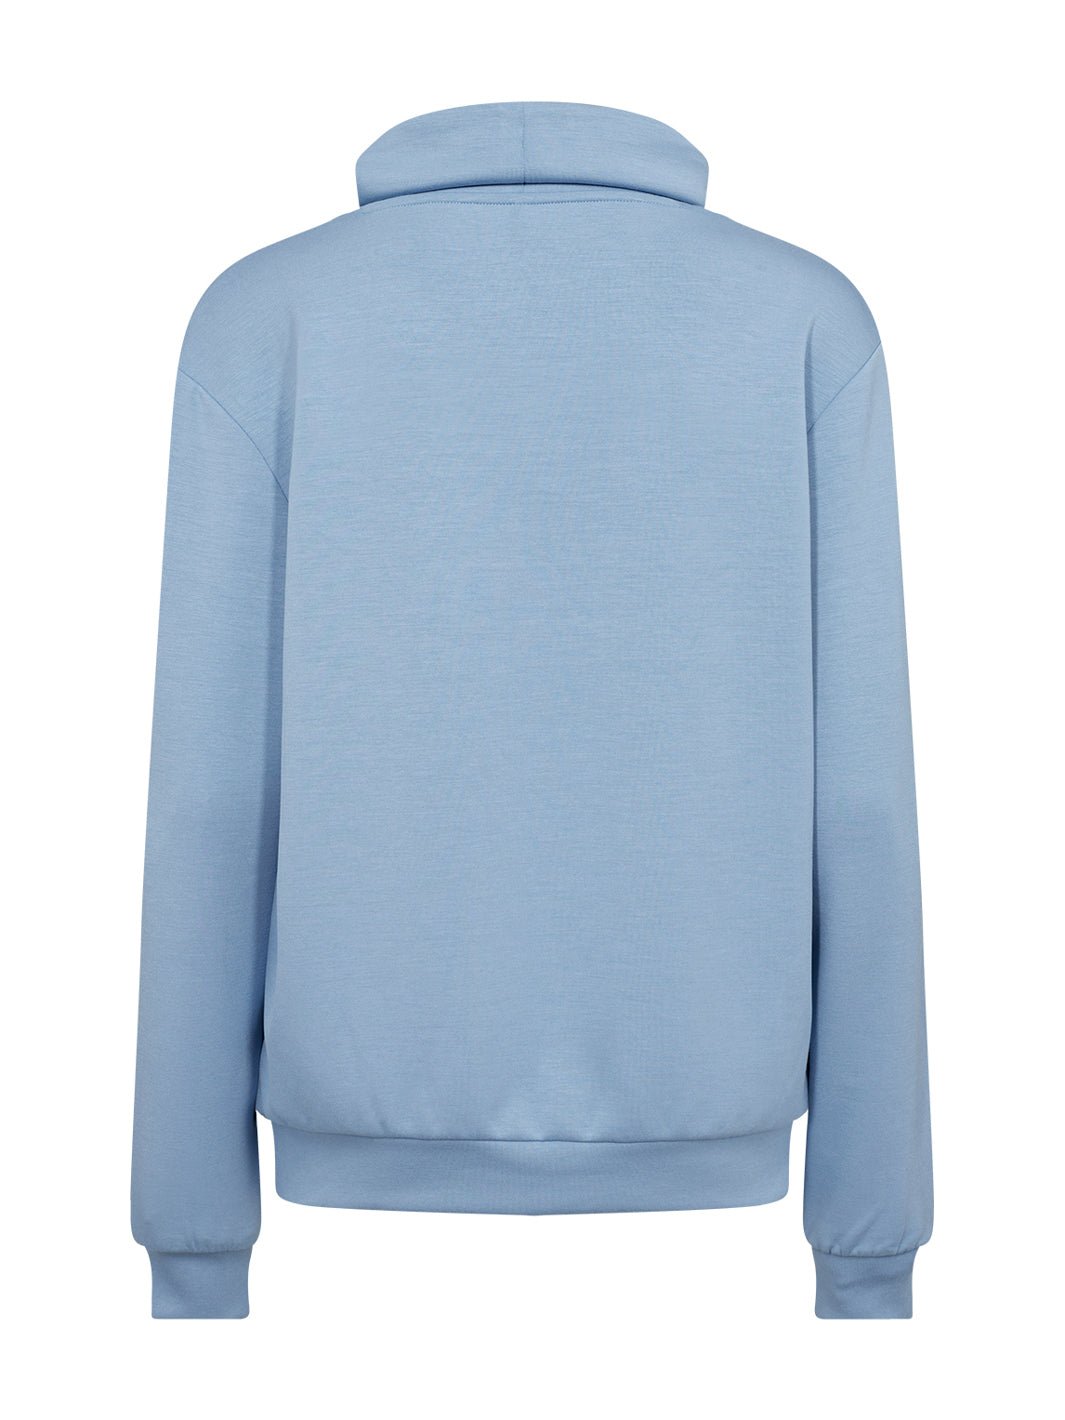 Soya Concept Banu 170 sweatshirt blue sky - Online-Mode